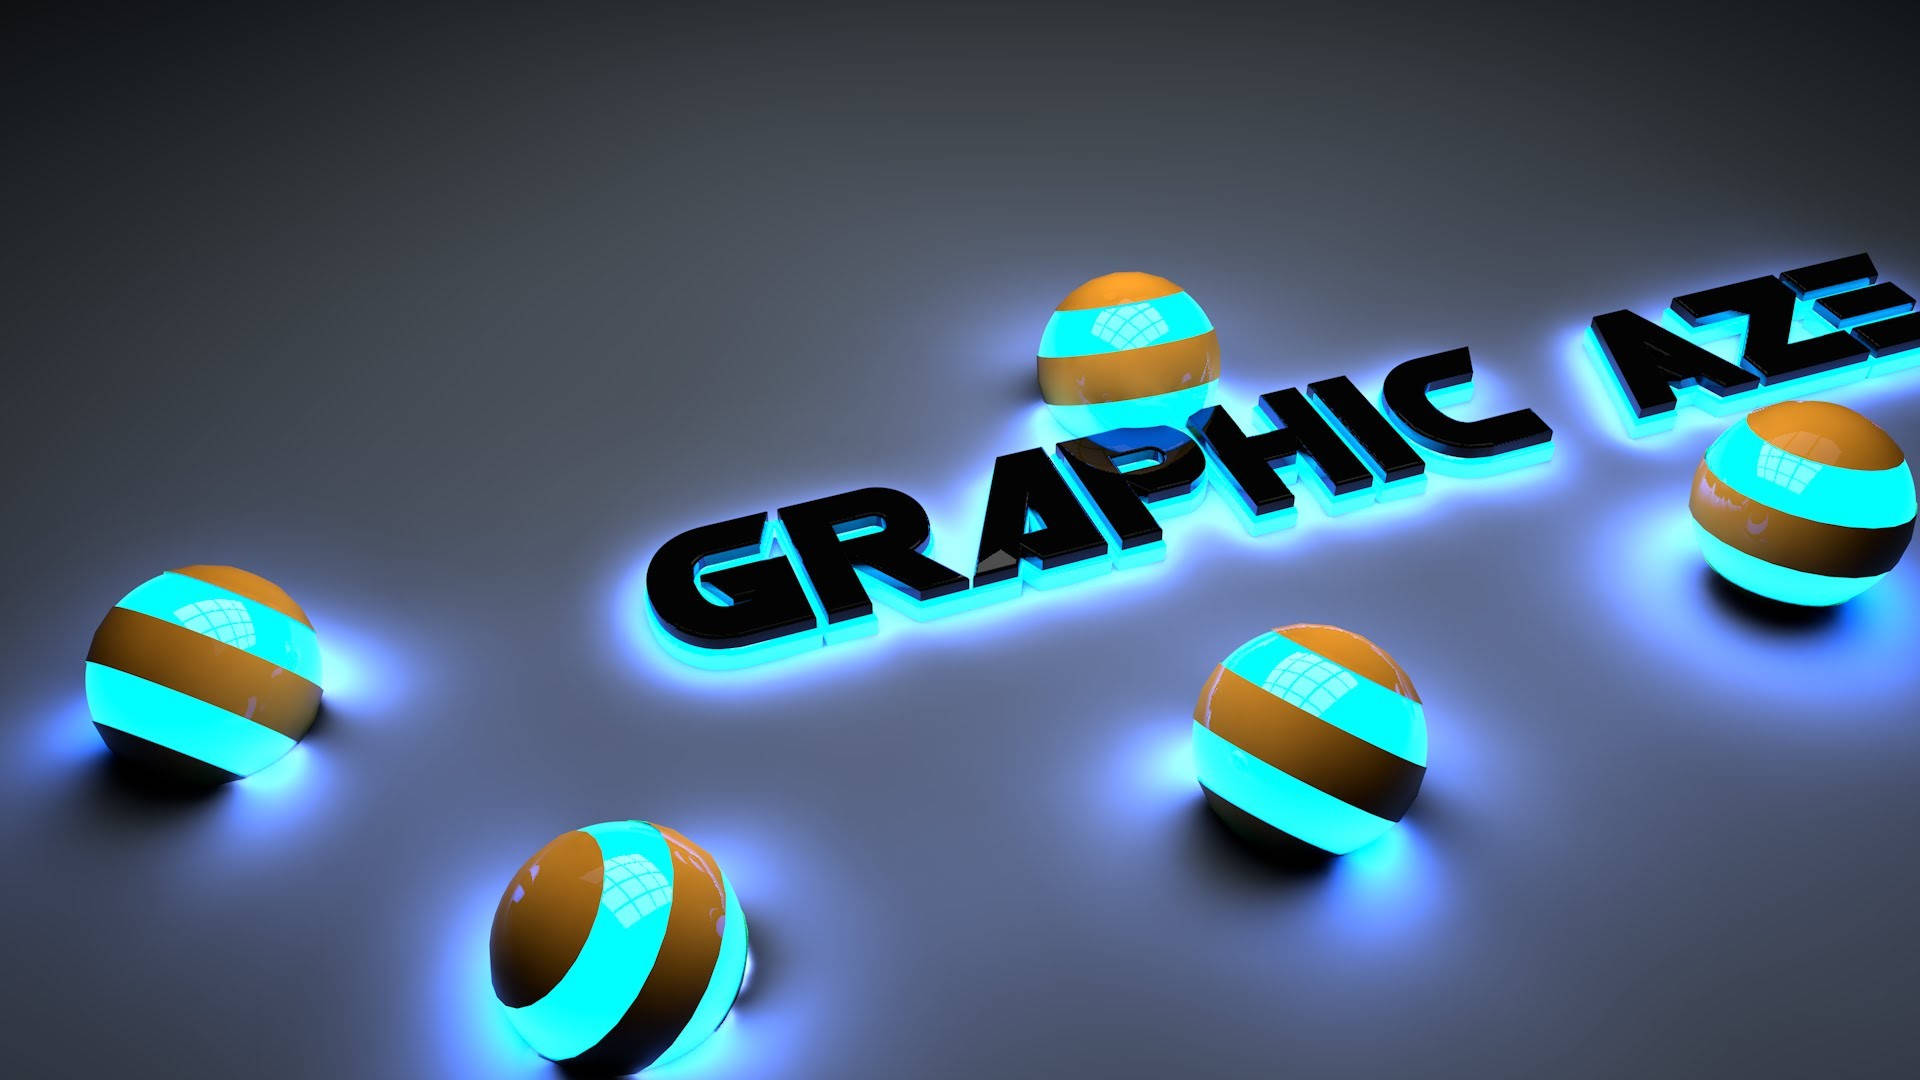 Luminous 4d Graphic Art